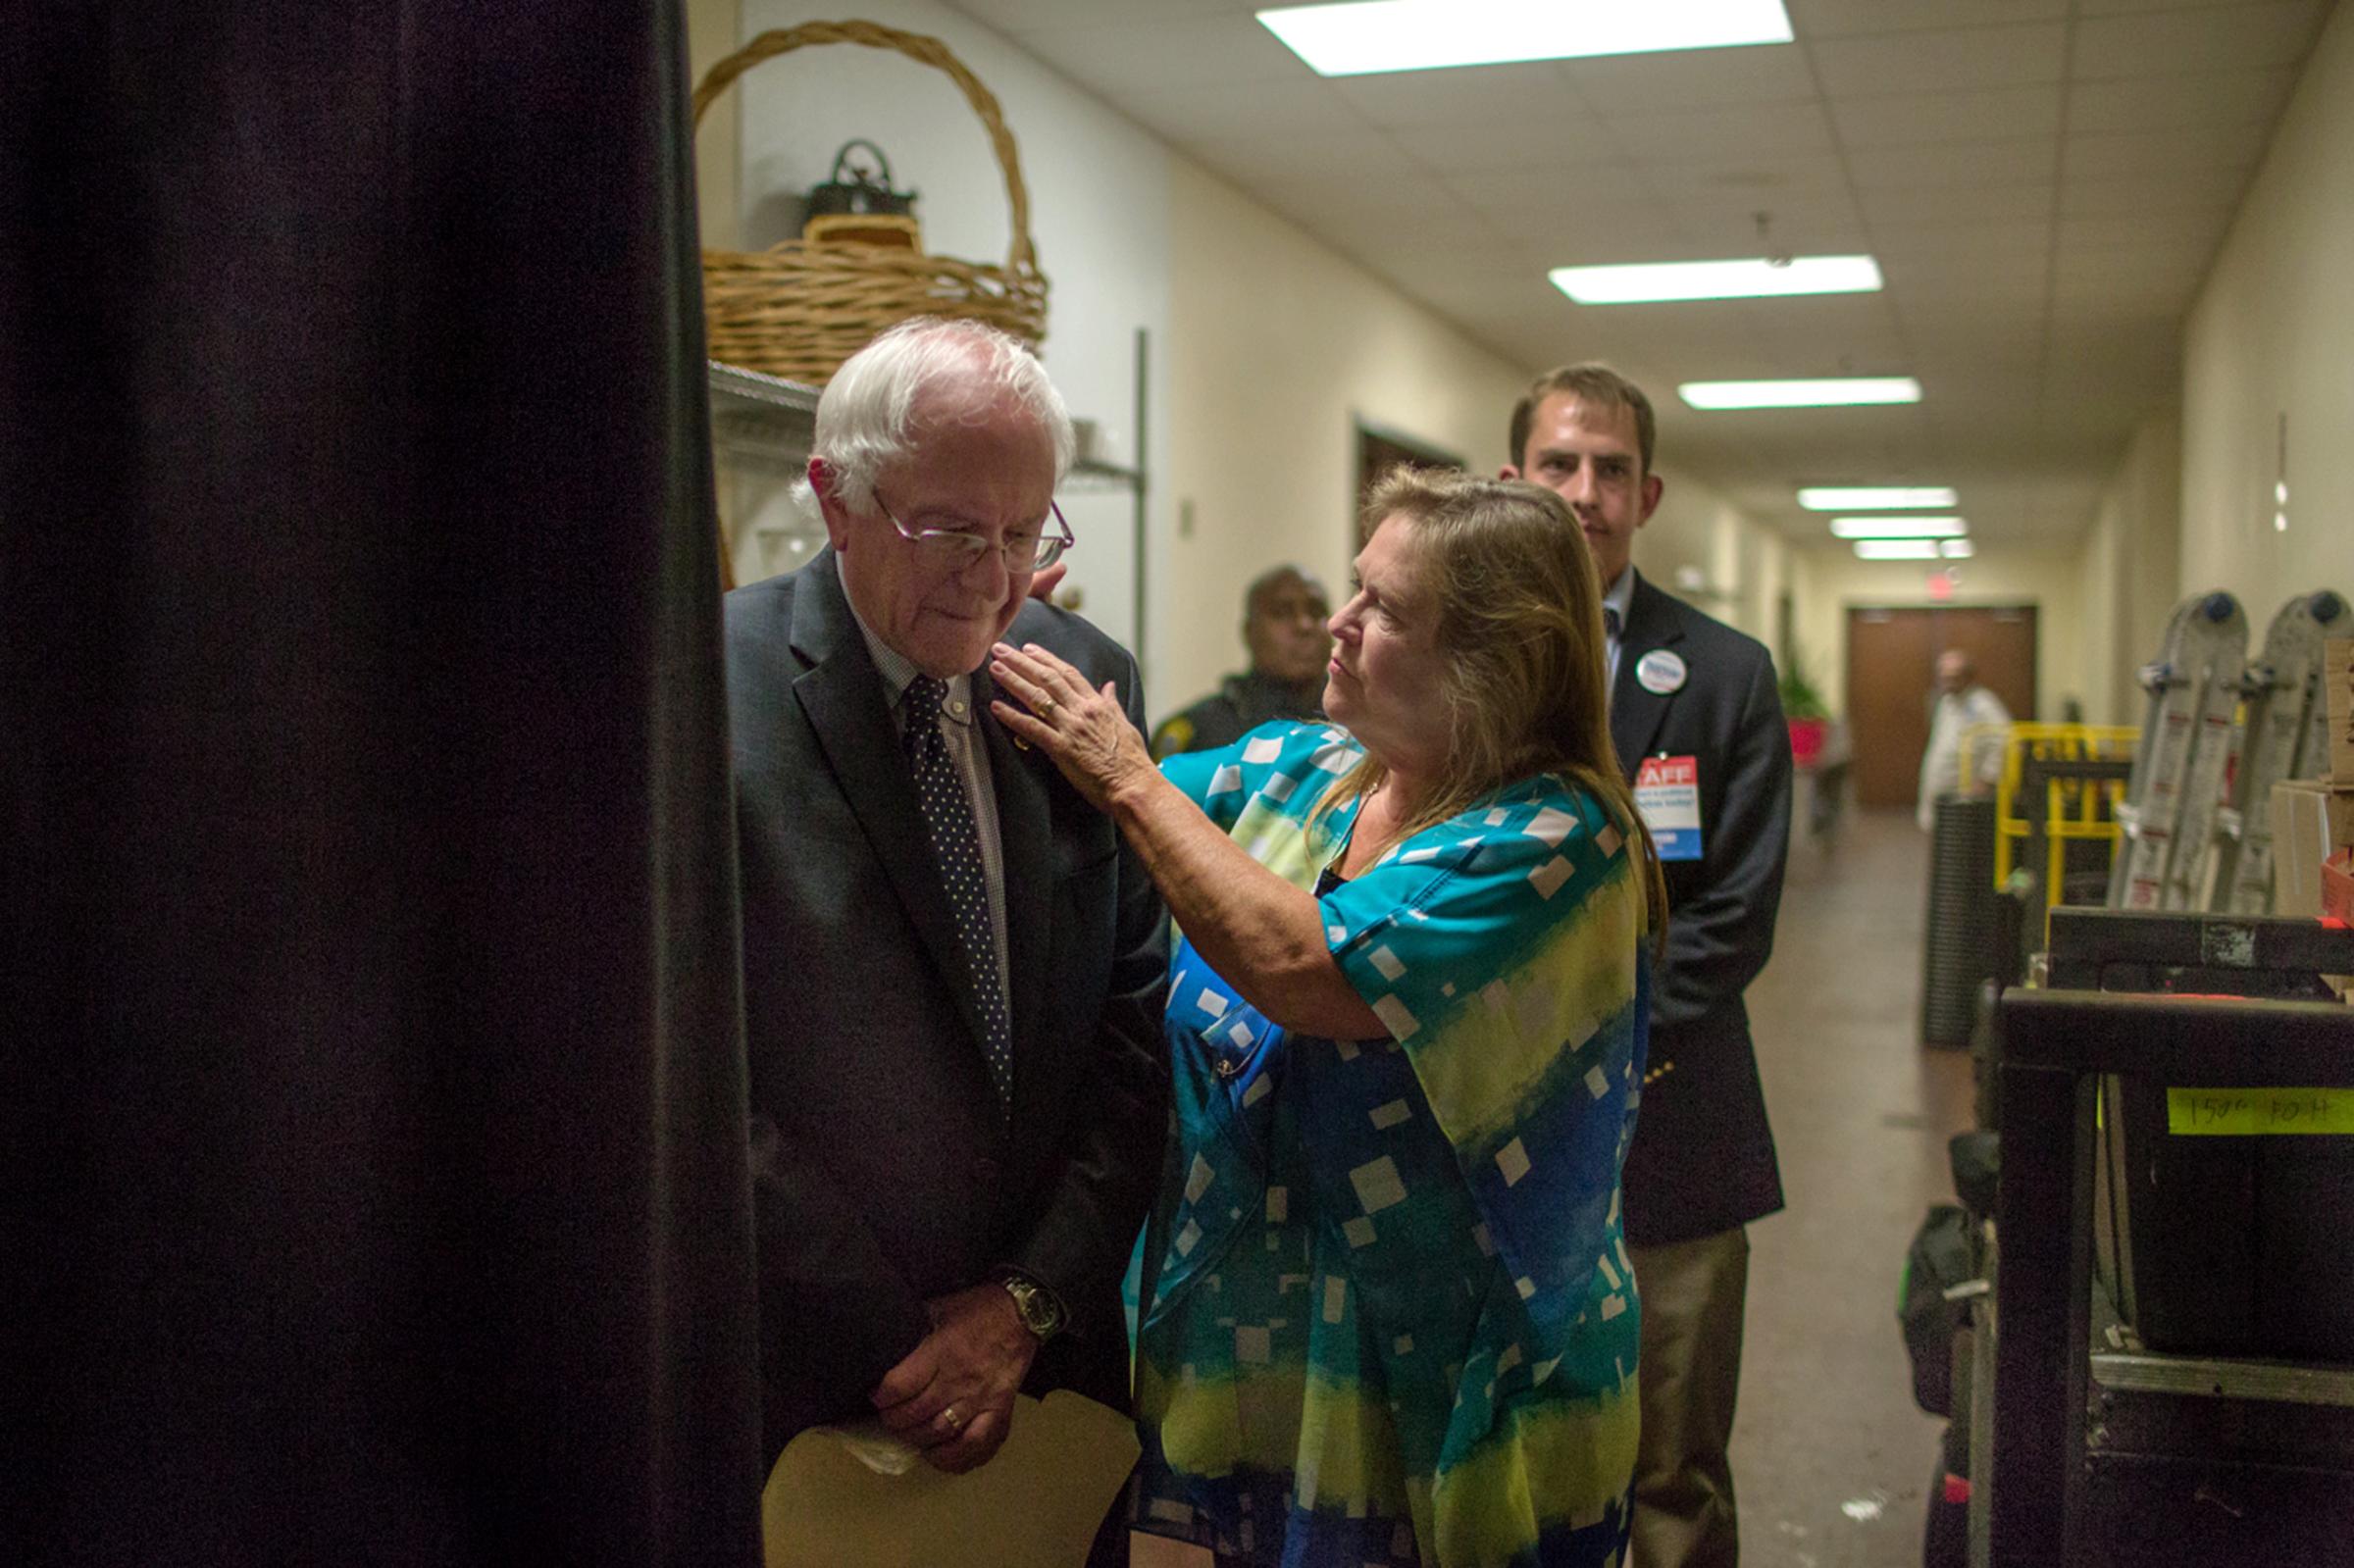 Jane O’Meara Sanders gets Senator Bernie Sanders ready for a rally in Columbia, SC on August 21st, 2015.